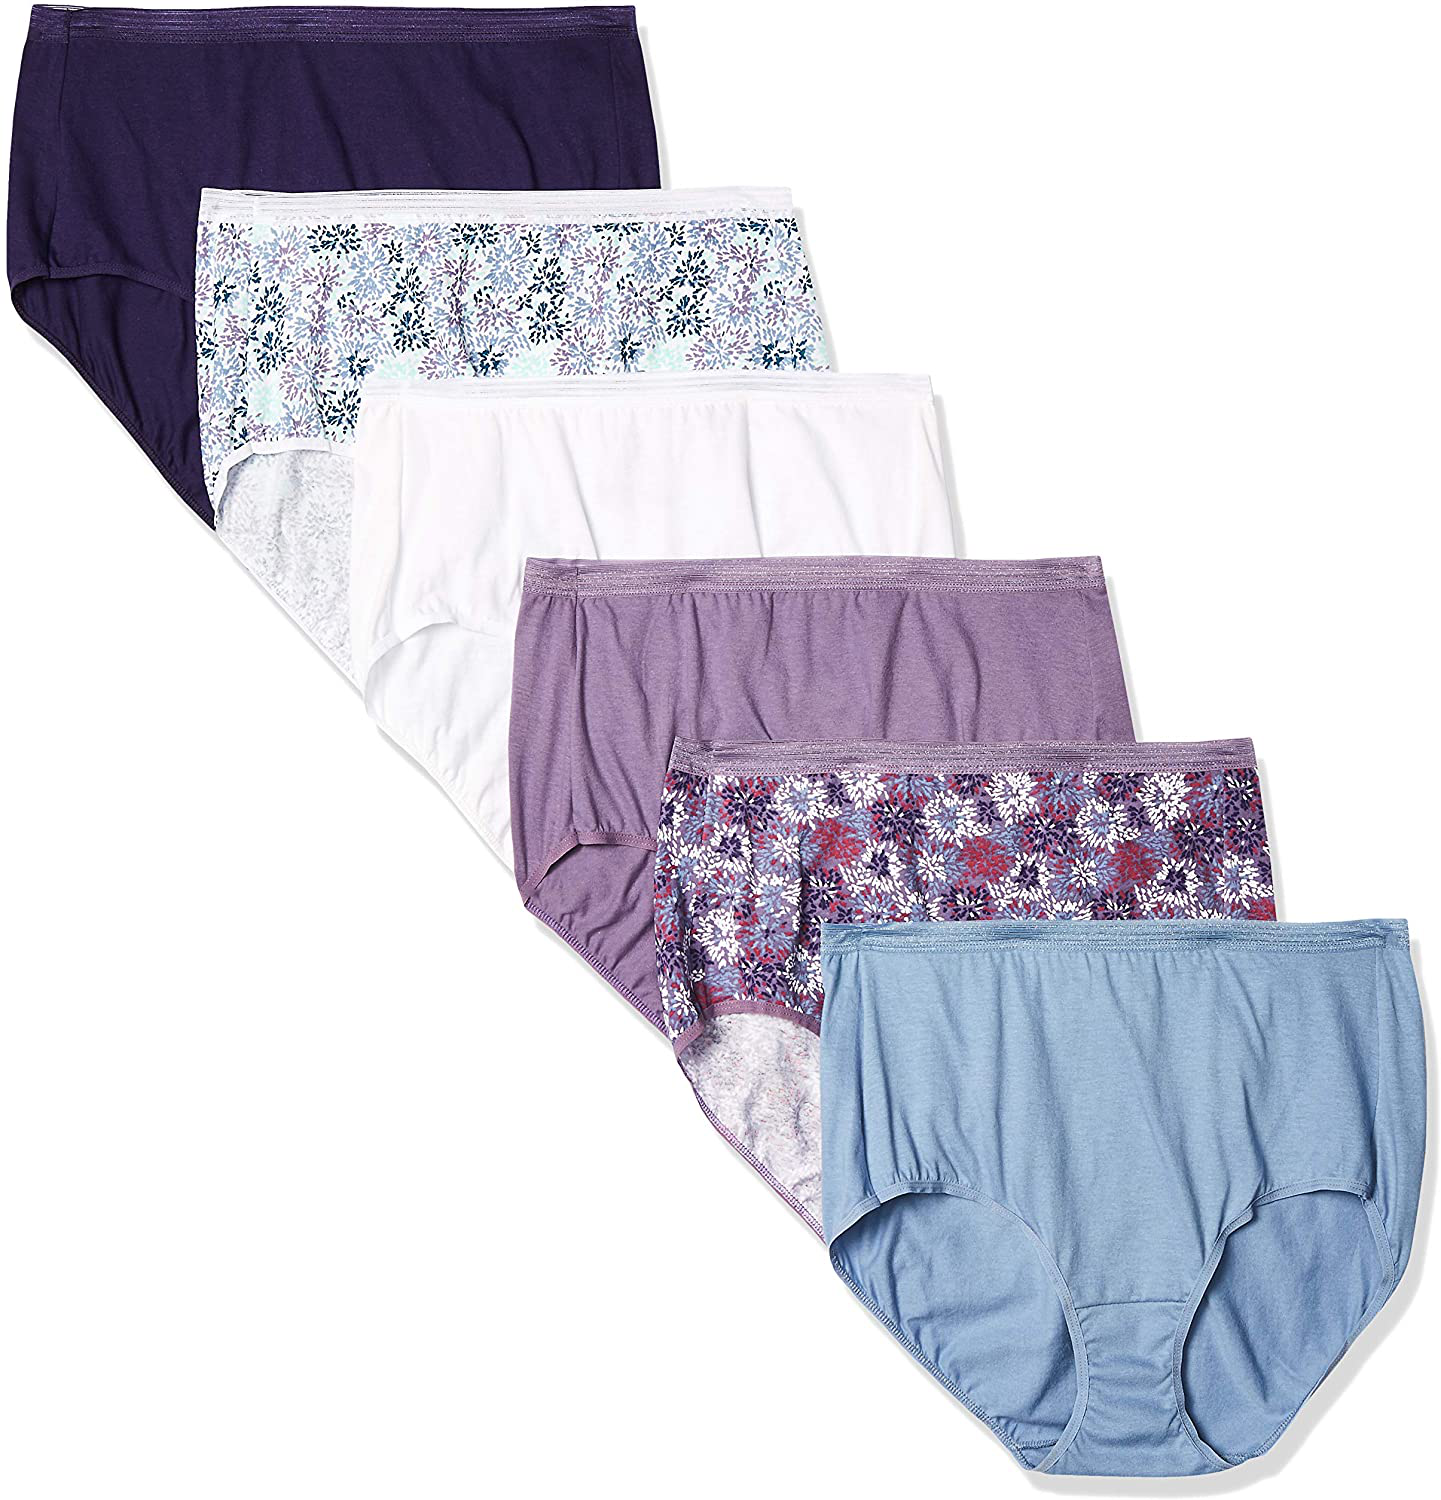 Hanes Women's Signature Microfiber Smooth Brief Underwear, 6-Pack